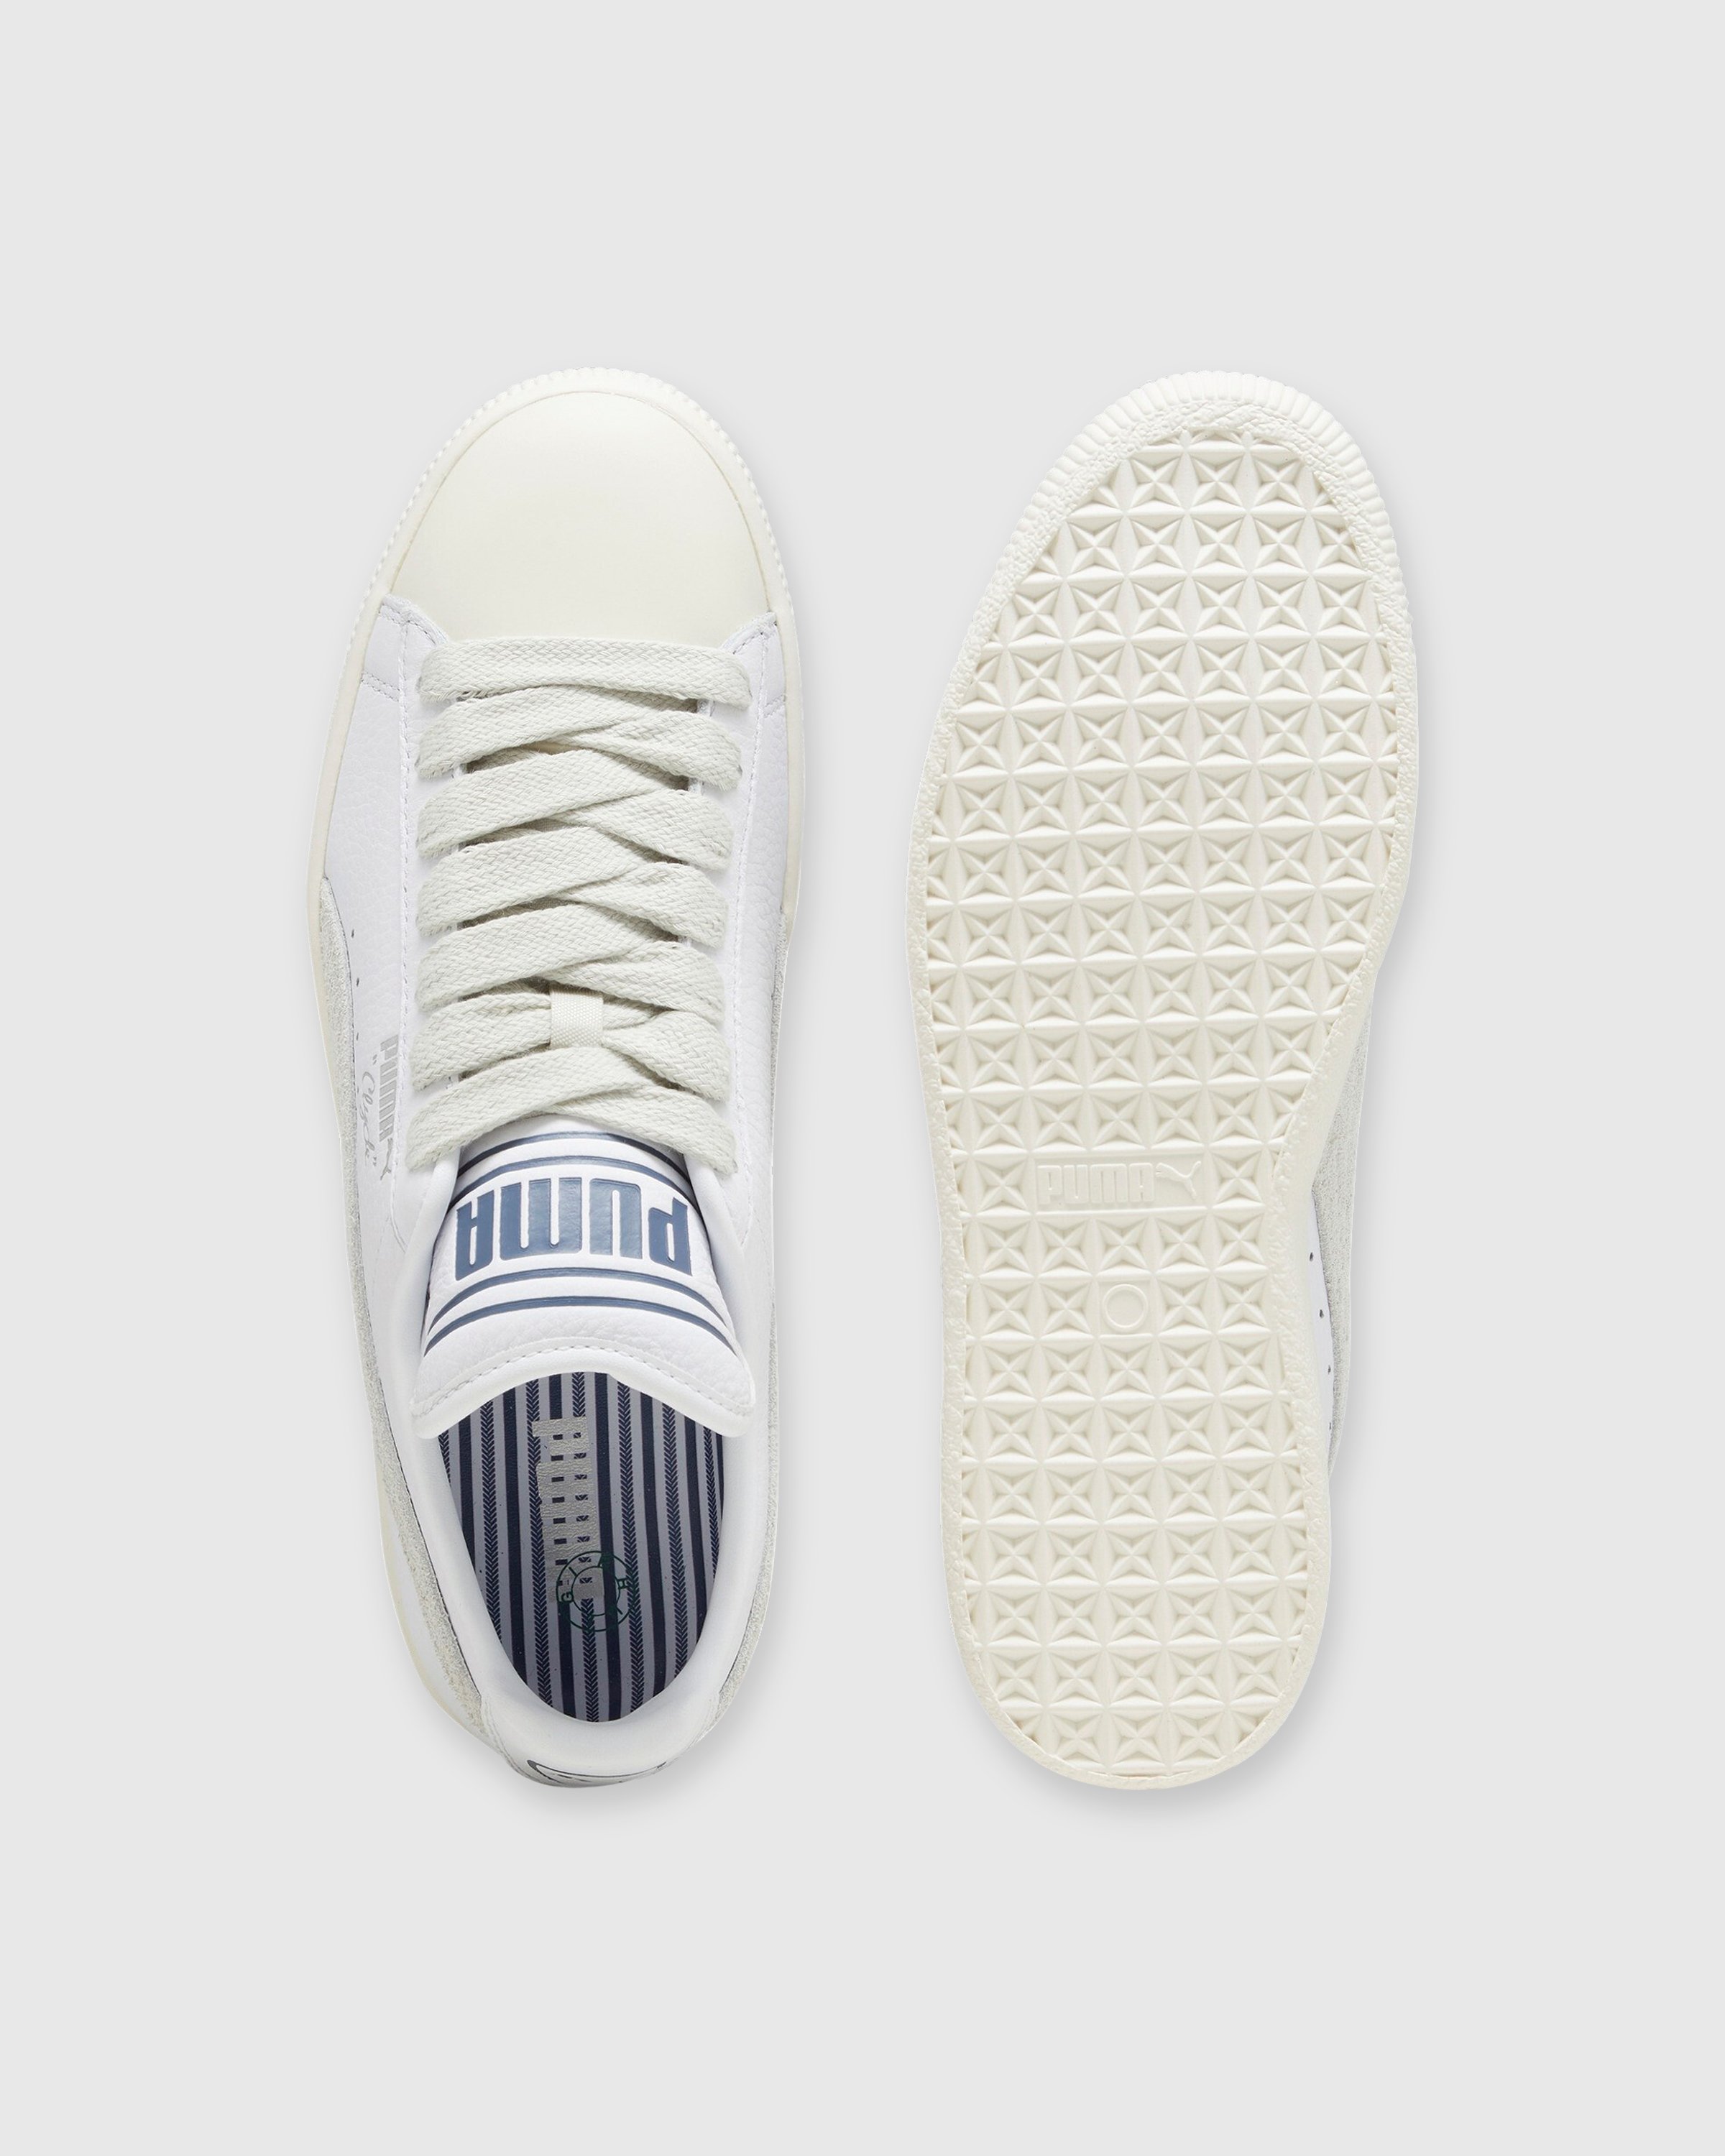 Puma - Clyde Rhuigi Pristine/Sedate Gray/White - Footwear - White - Image 4